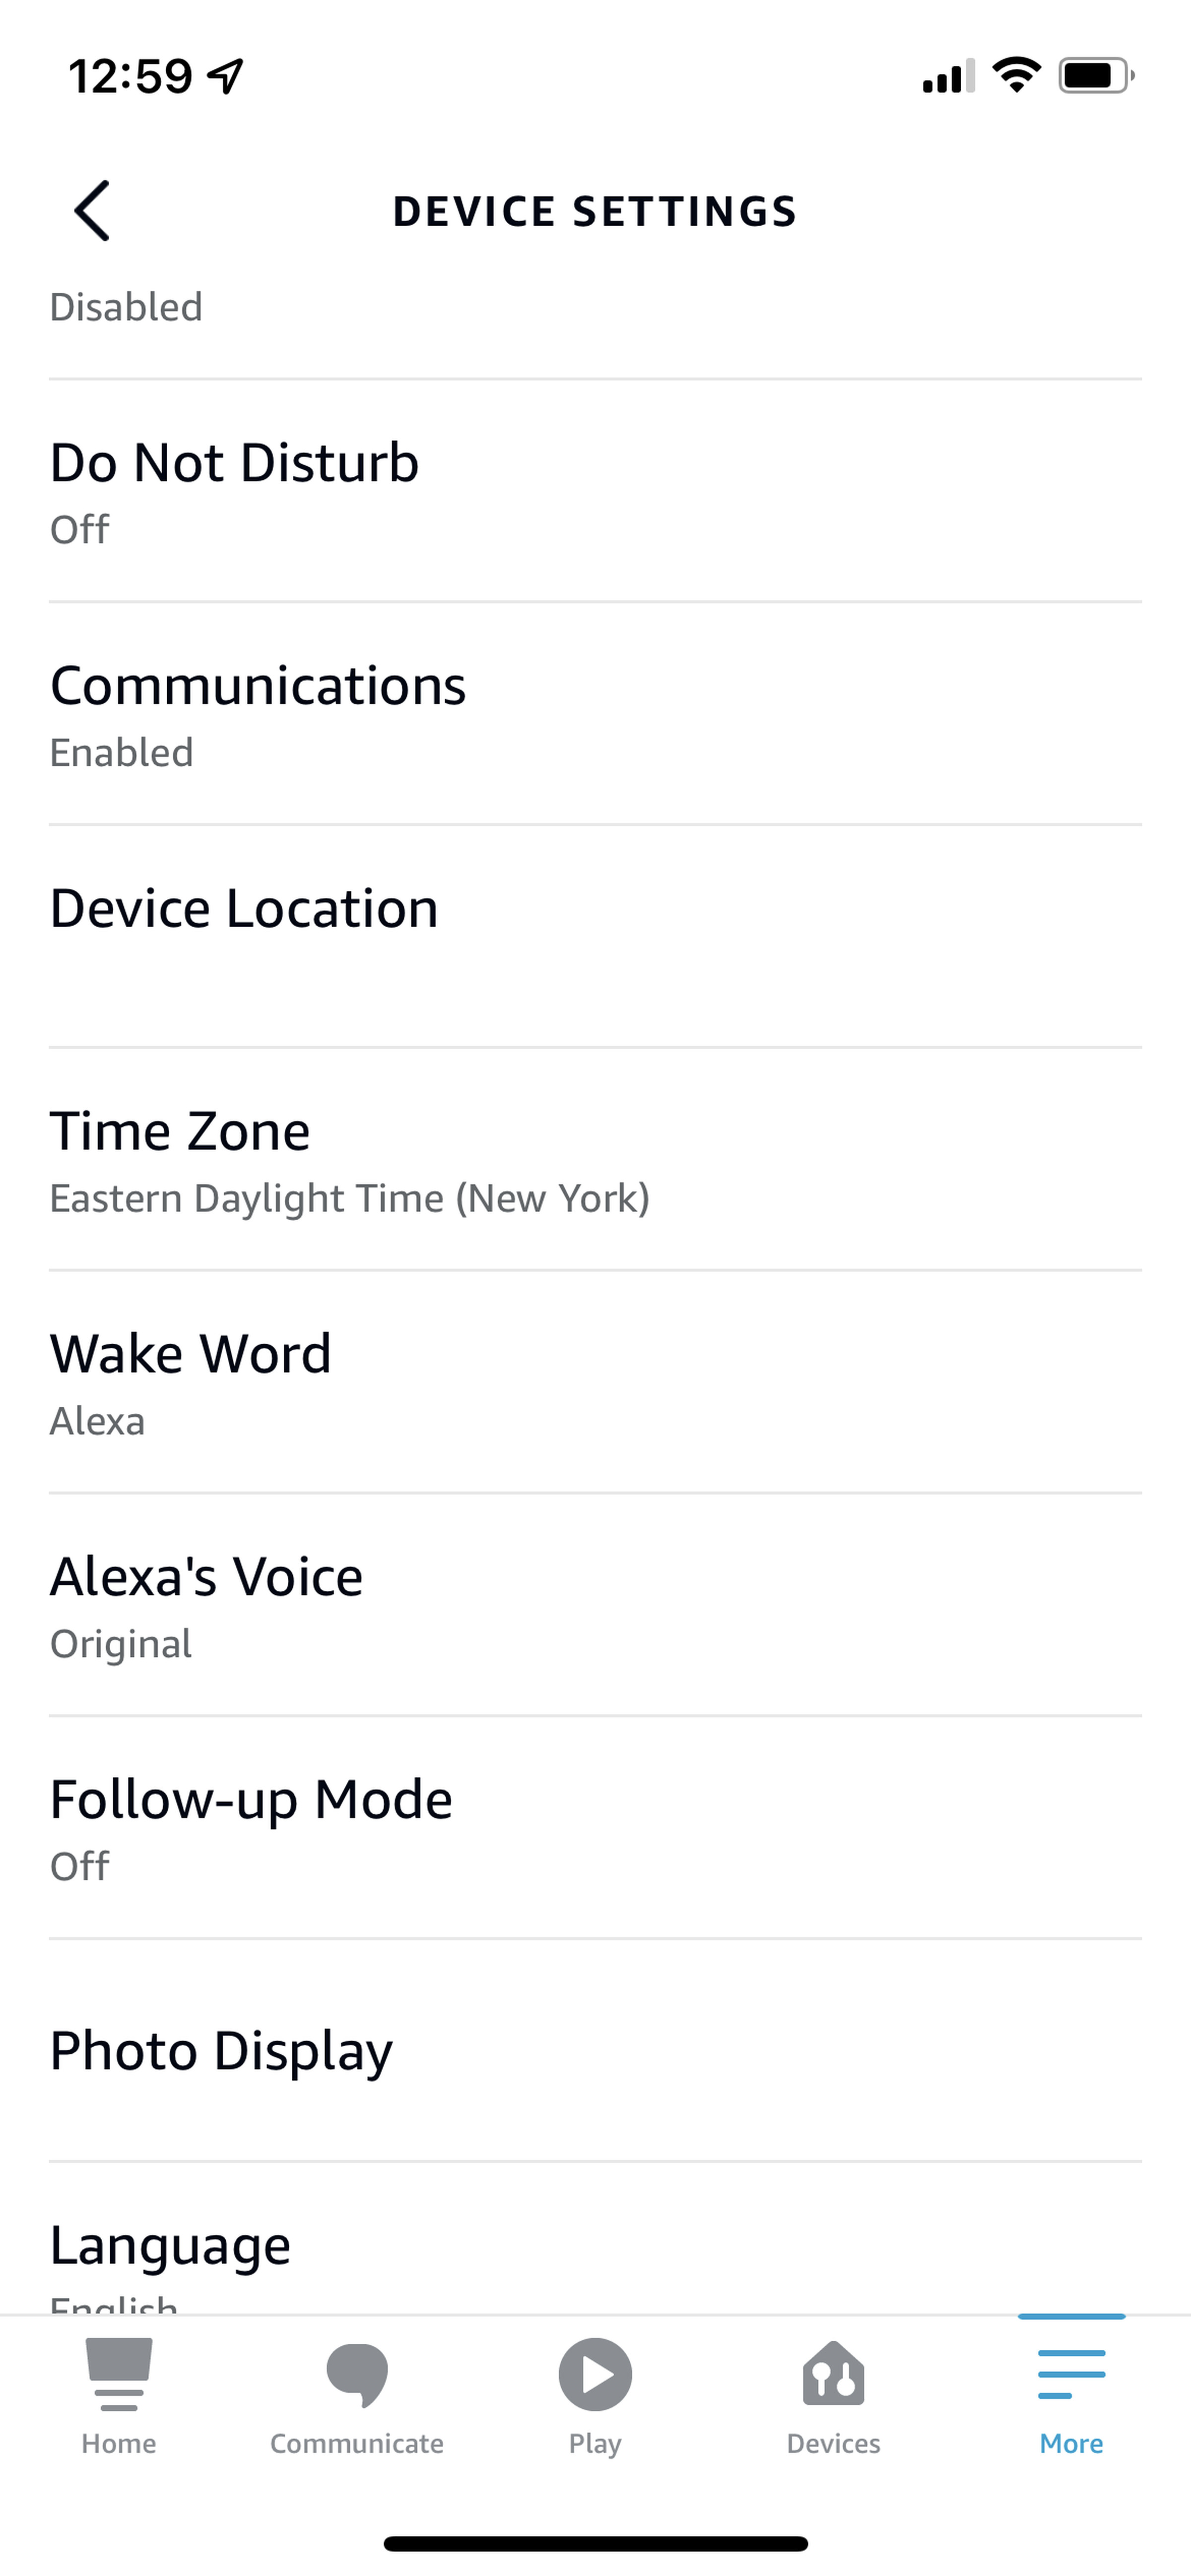 Amazon’s new “Alexa’s Voice” setting menu.